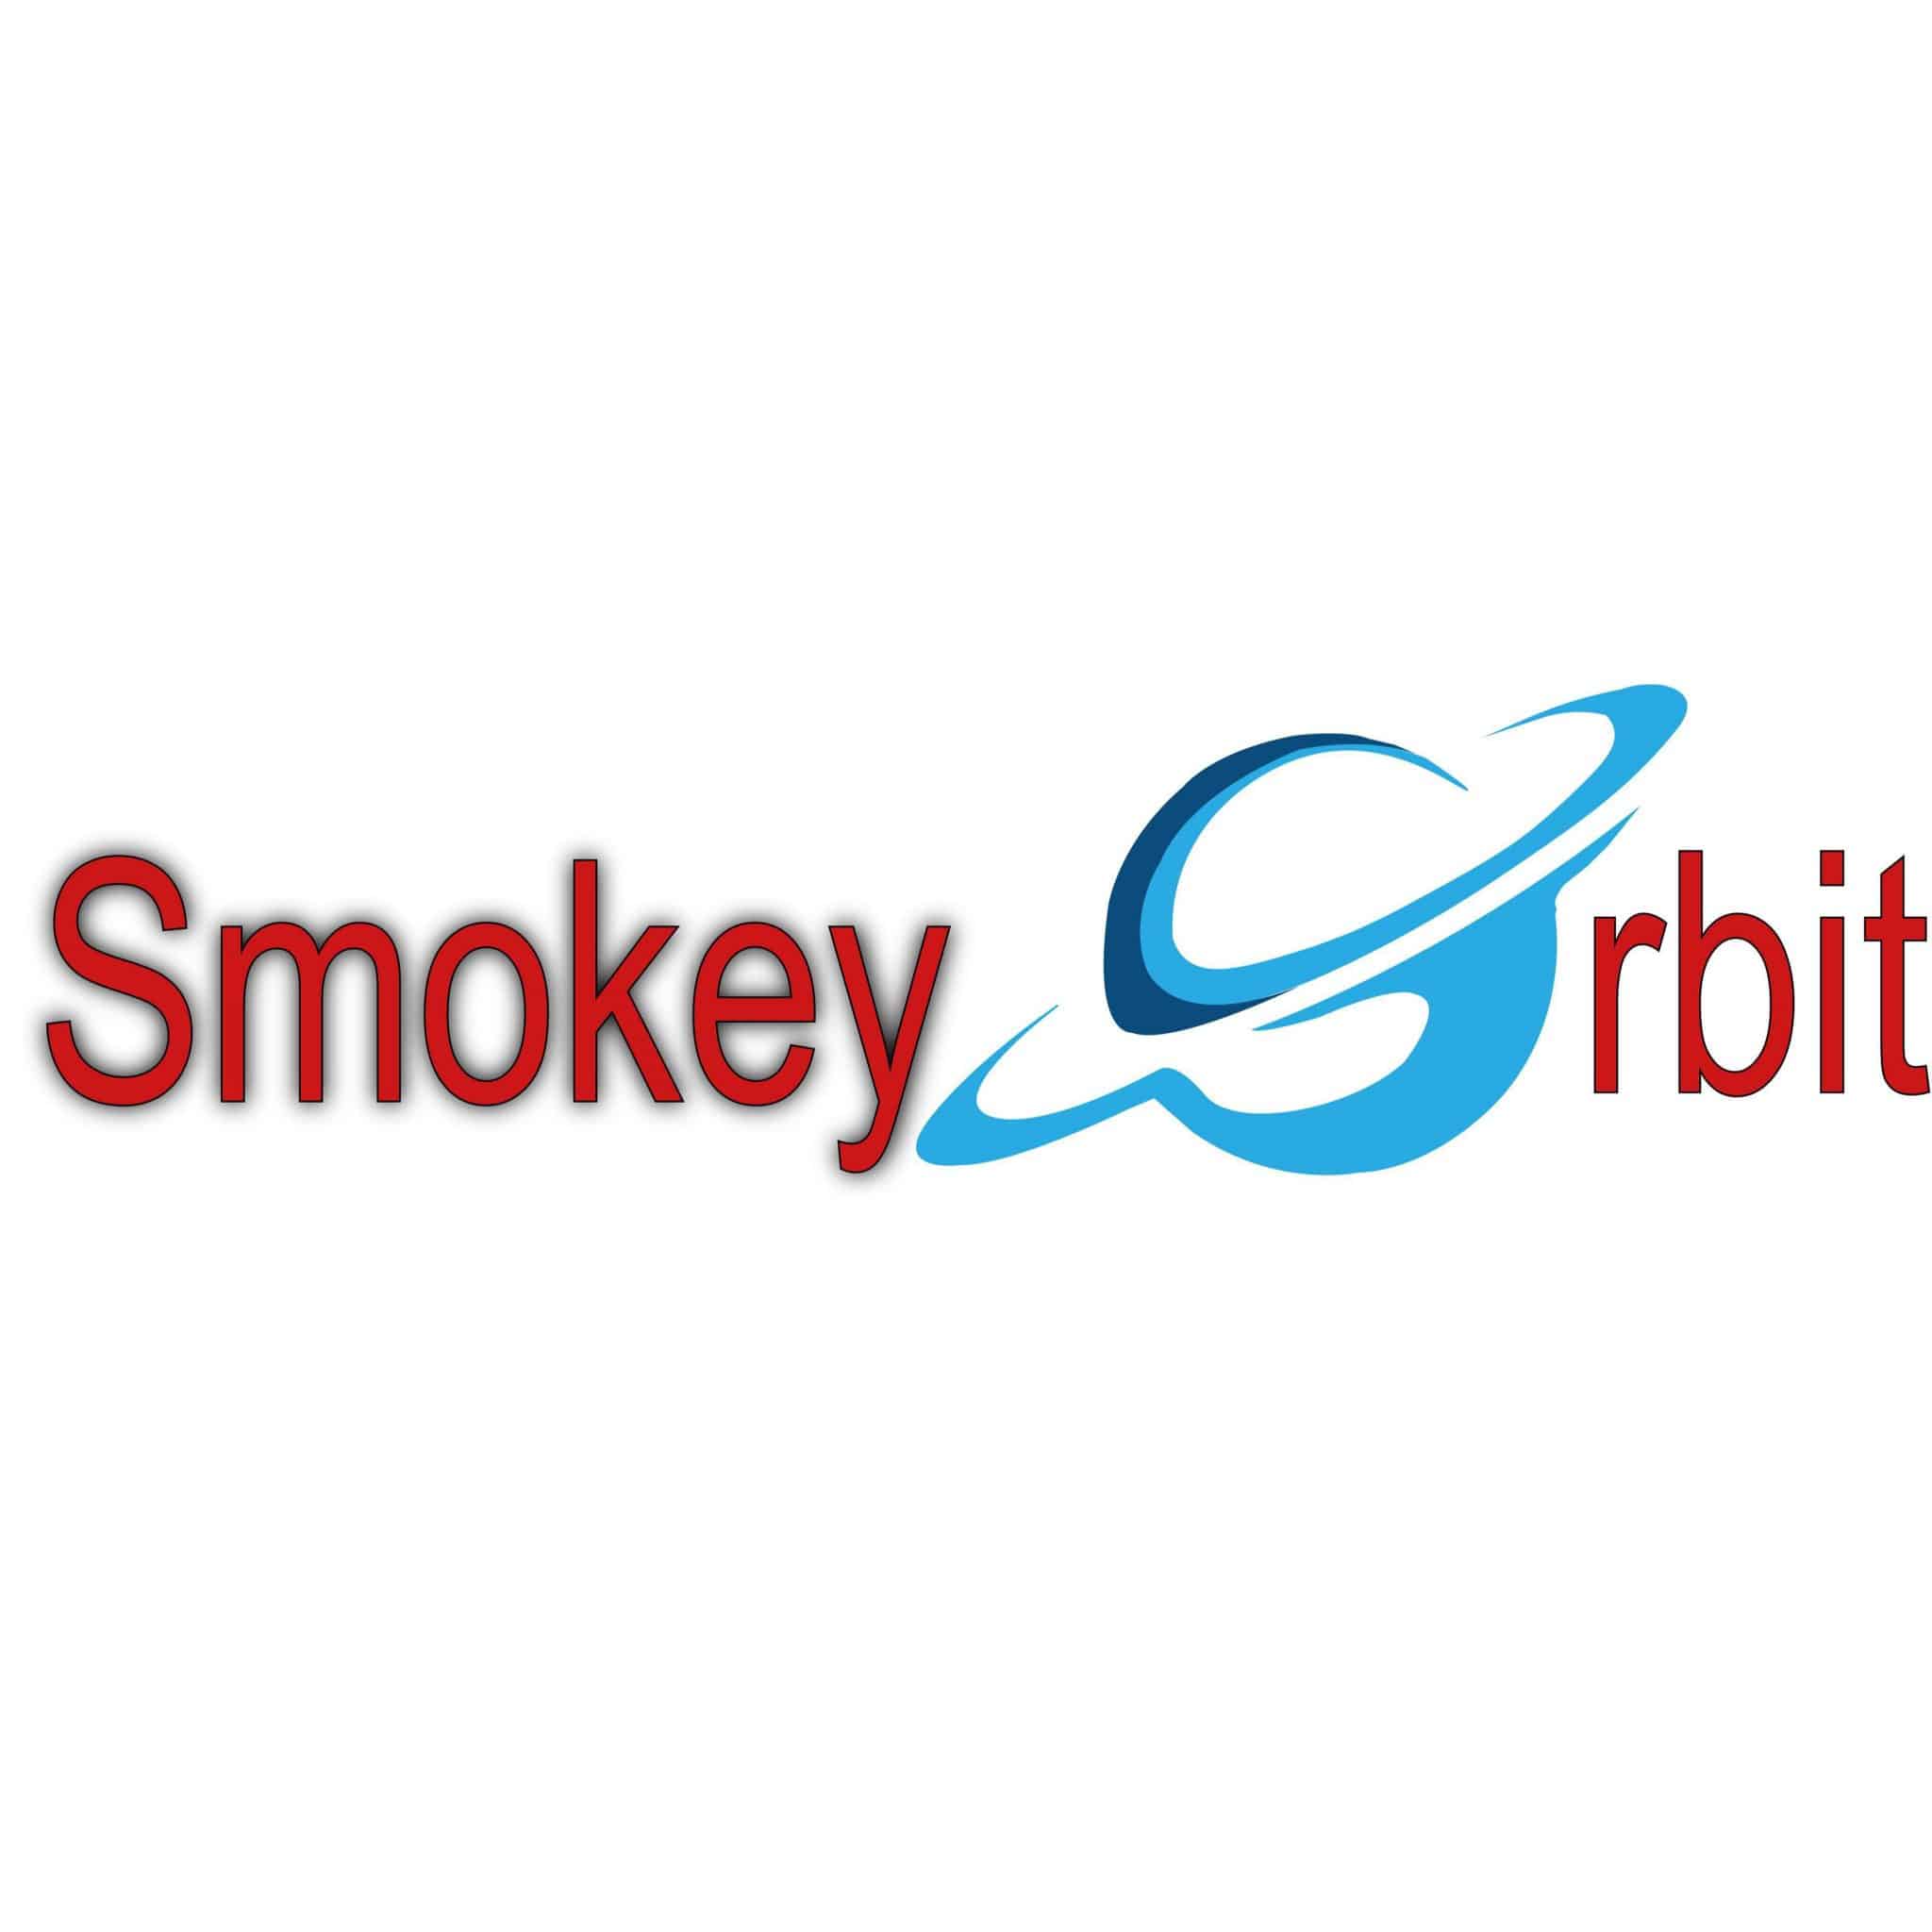 Smokey Orbit, 3601 E 29th St, Bryan, TX 77802, United States